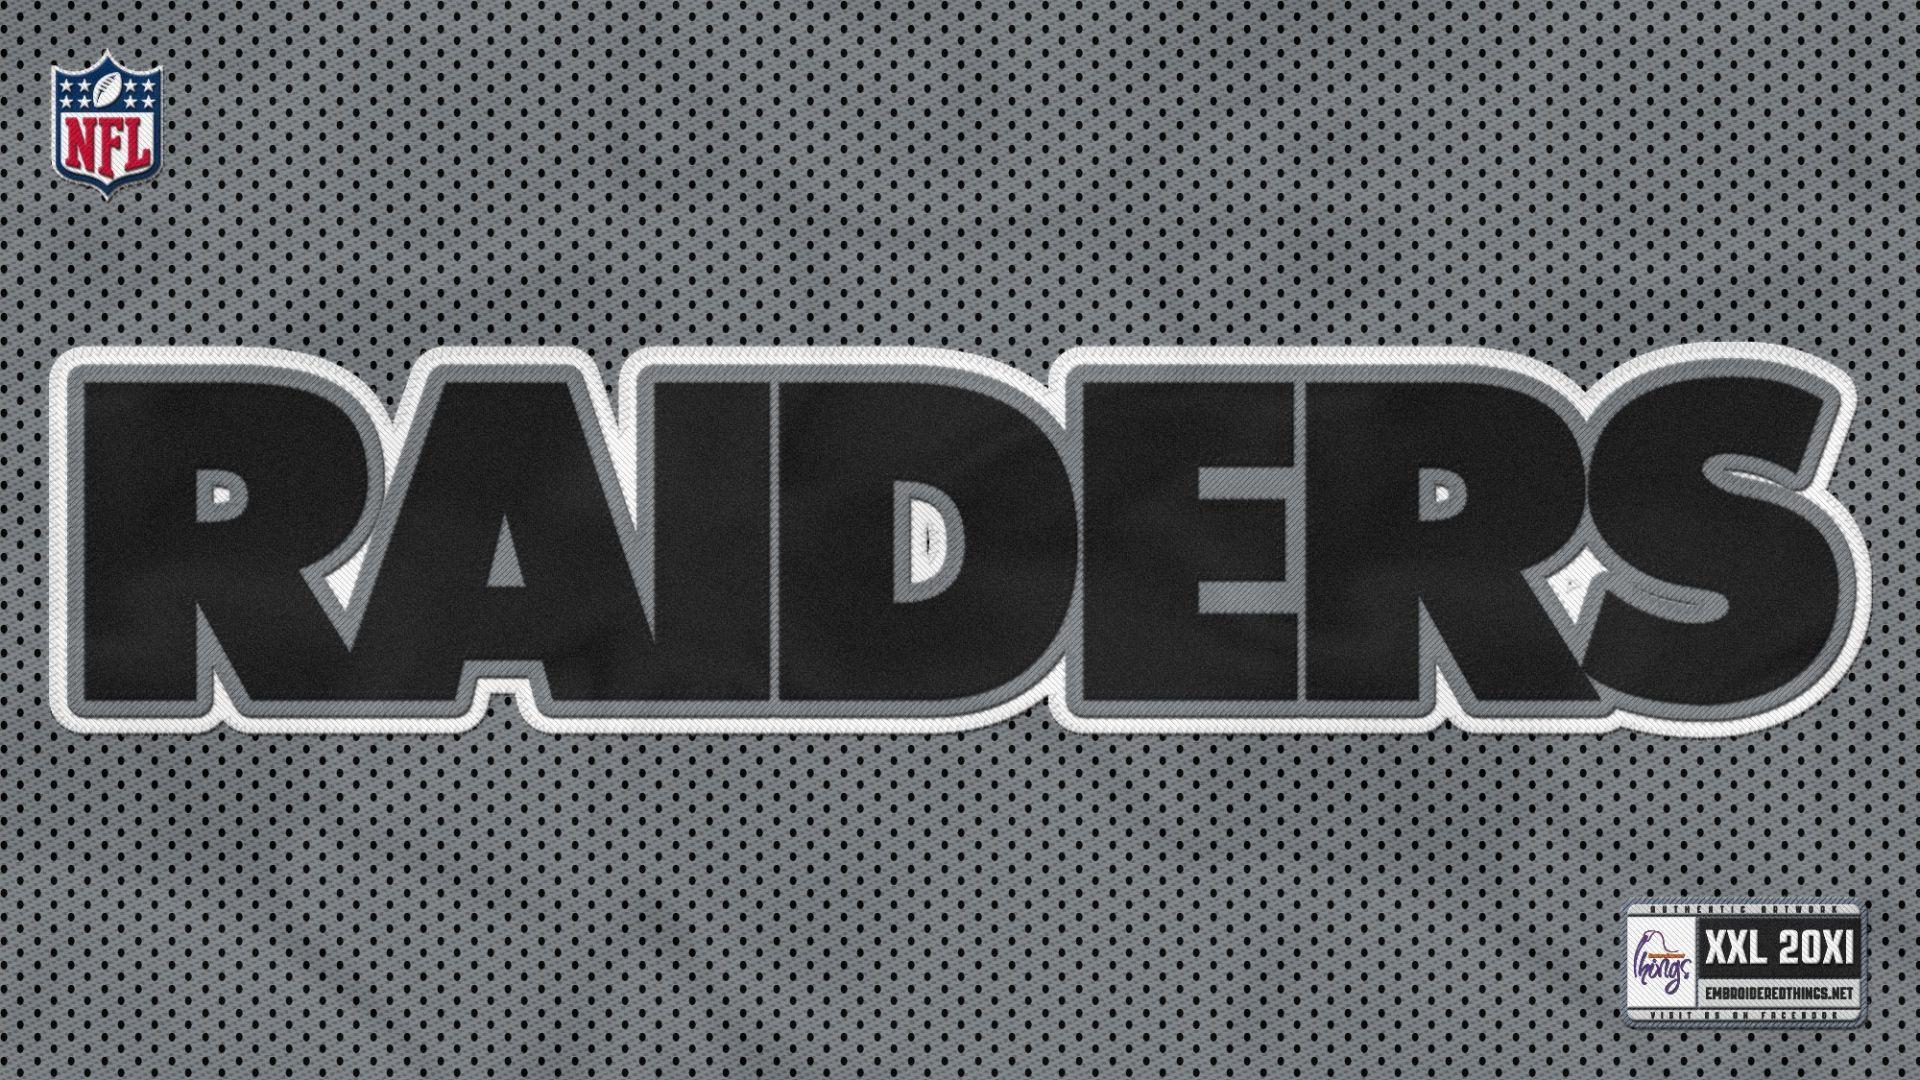 Los Angeles Raiders Wallpaper. oakland raiders wallpaper HD6